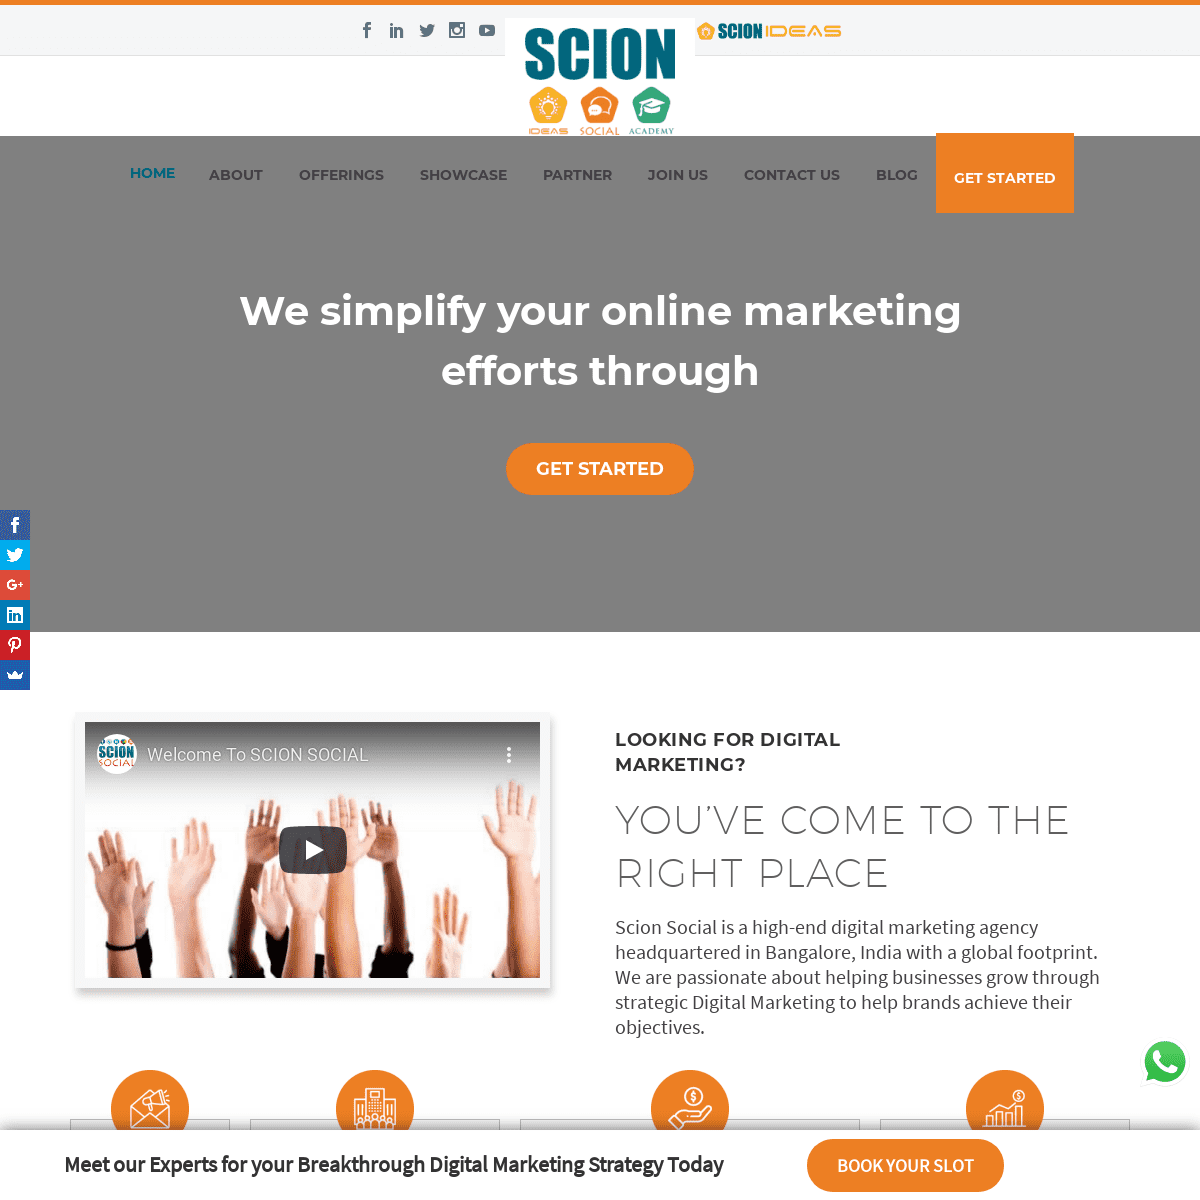 A complete backup of scion-social.com